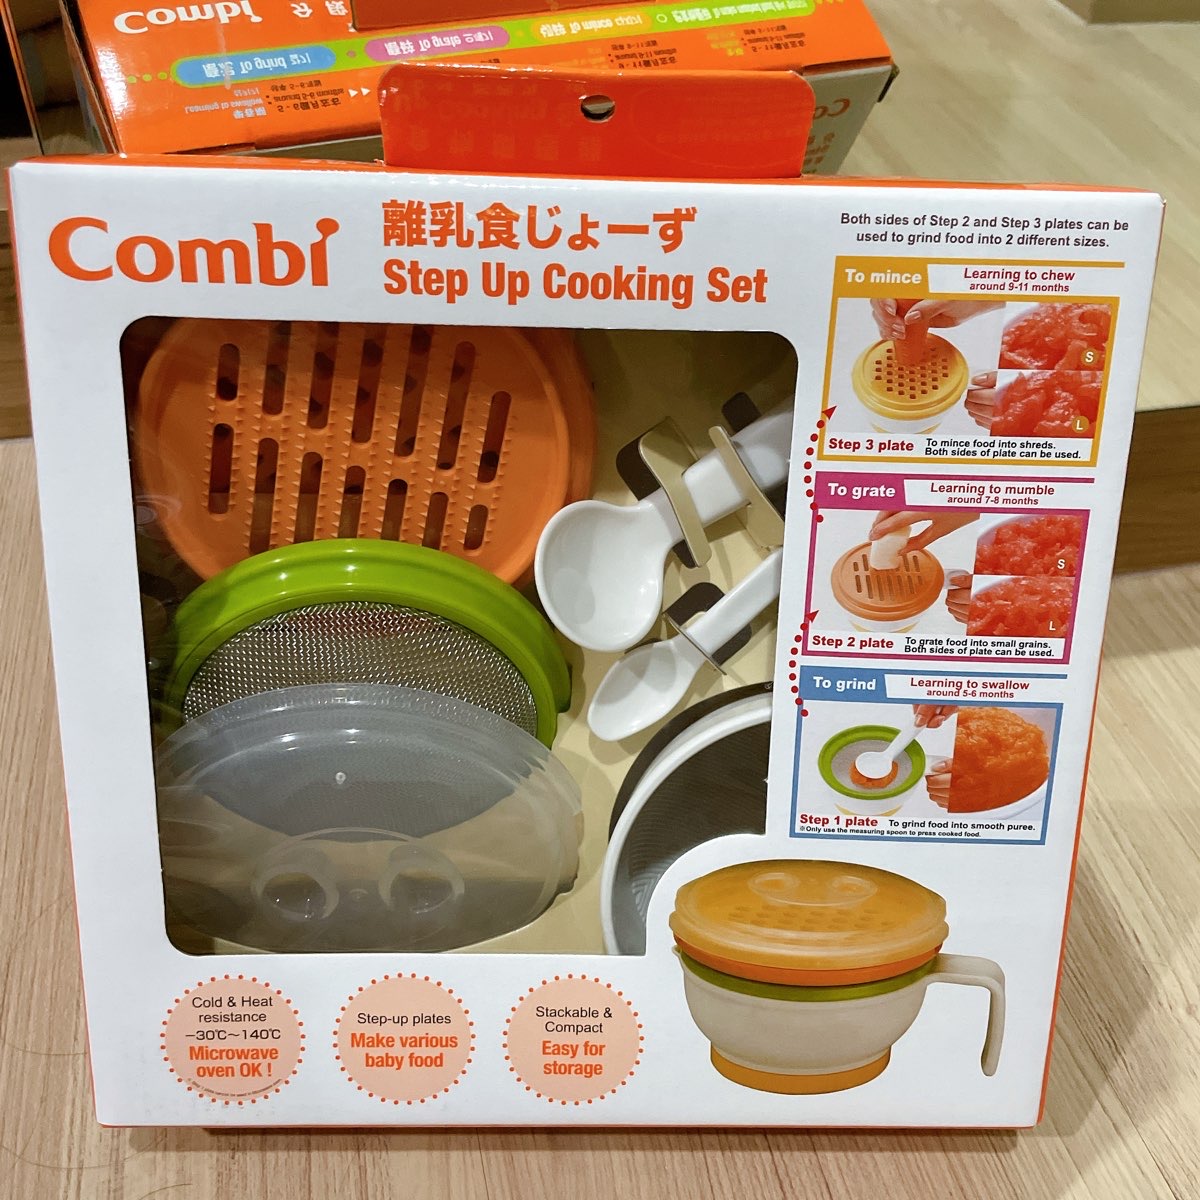 combi step up cooking set